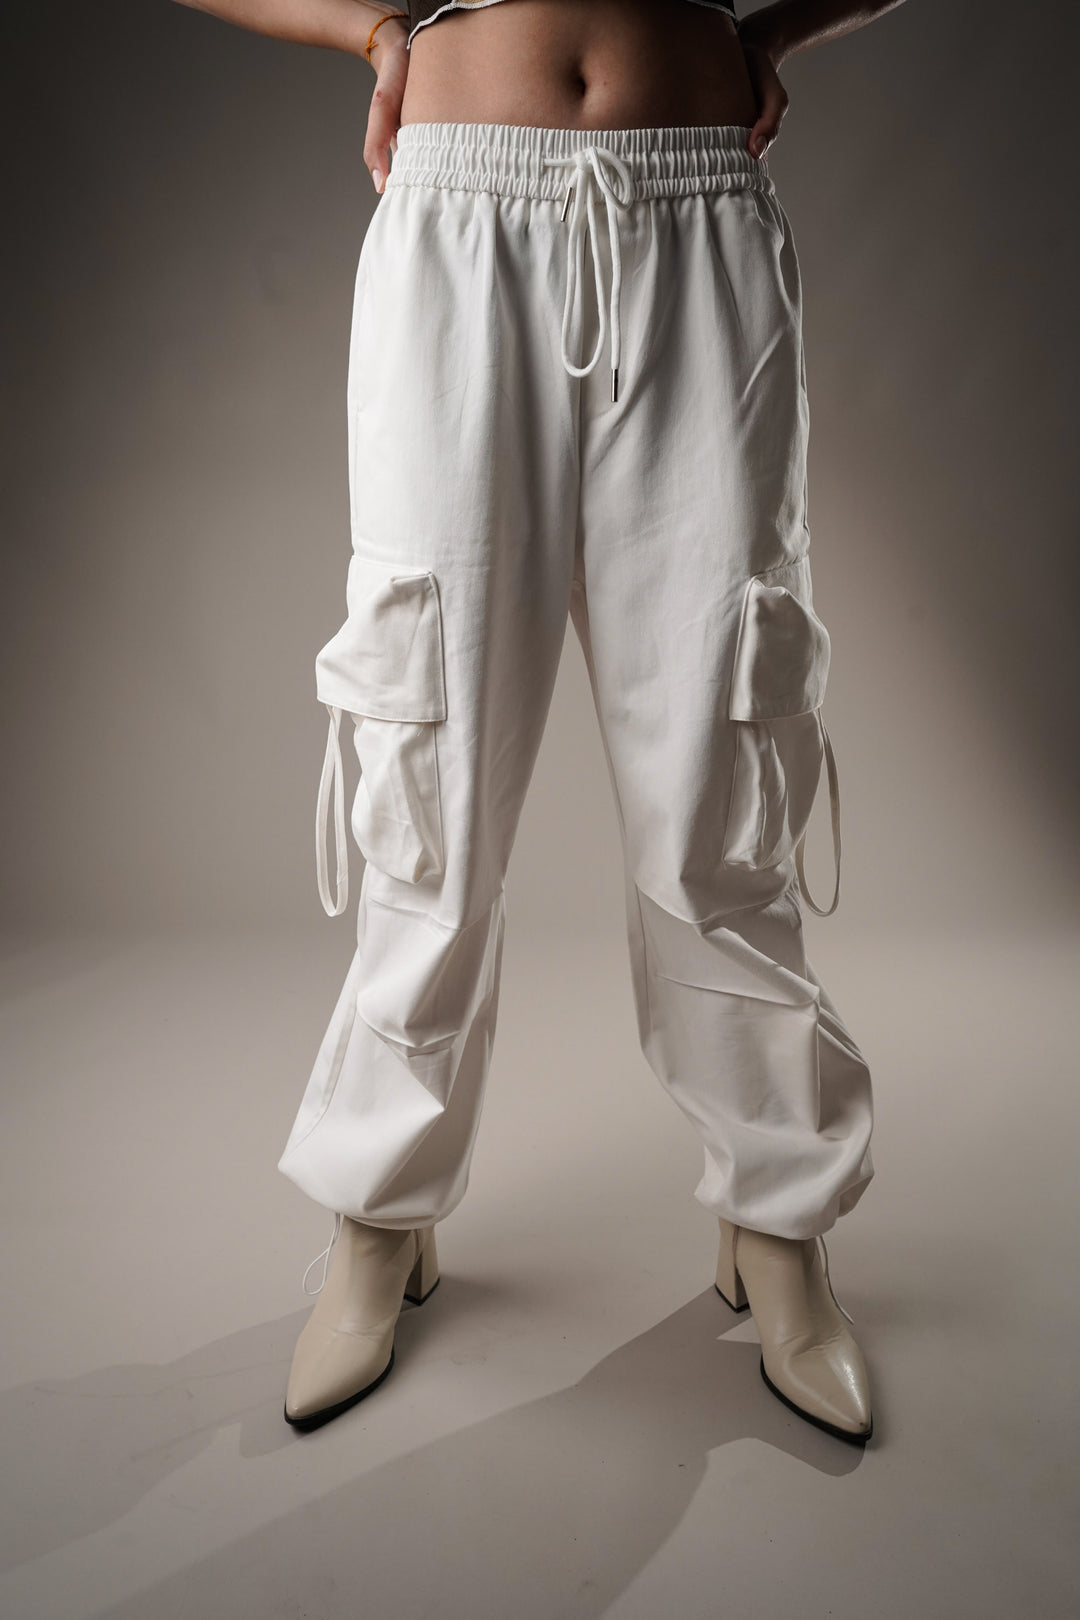 Fashion-forward oversized cargo pants in white